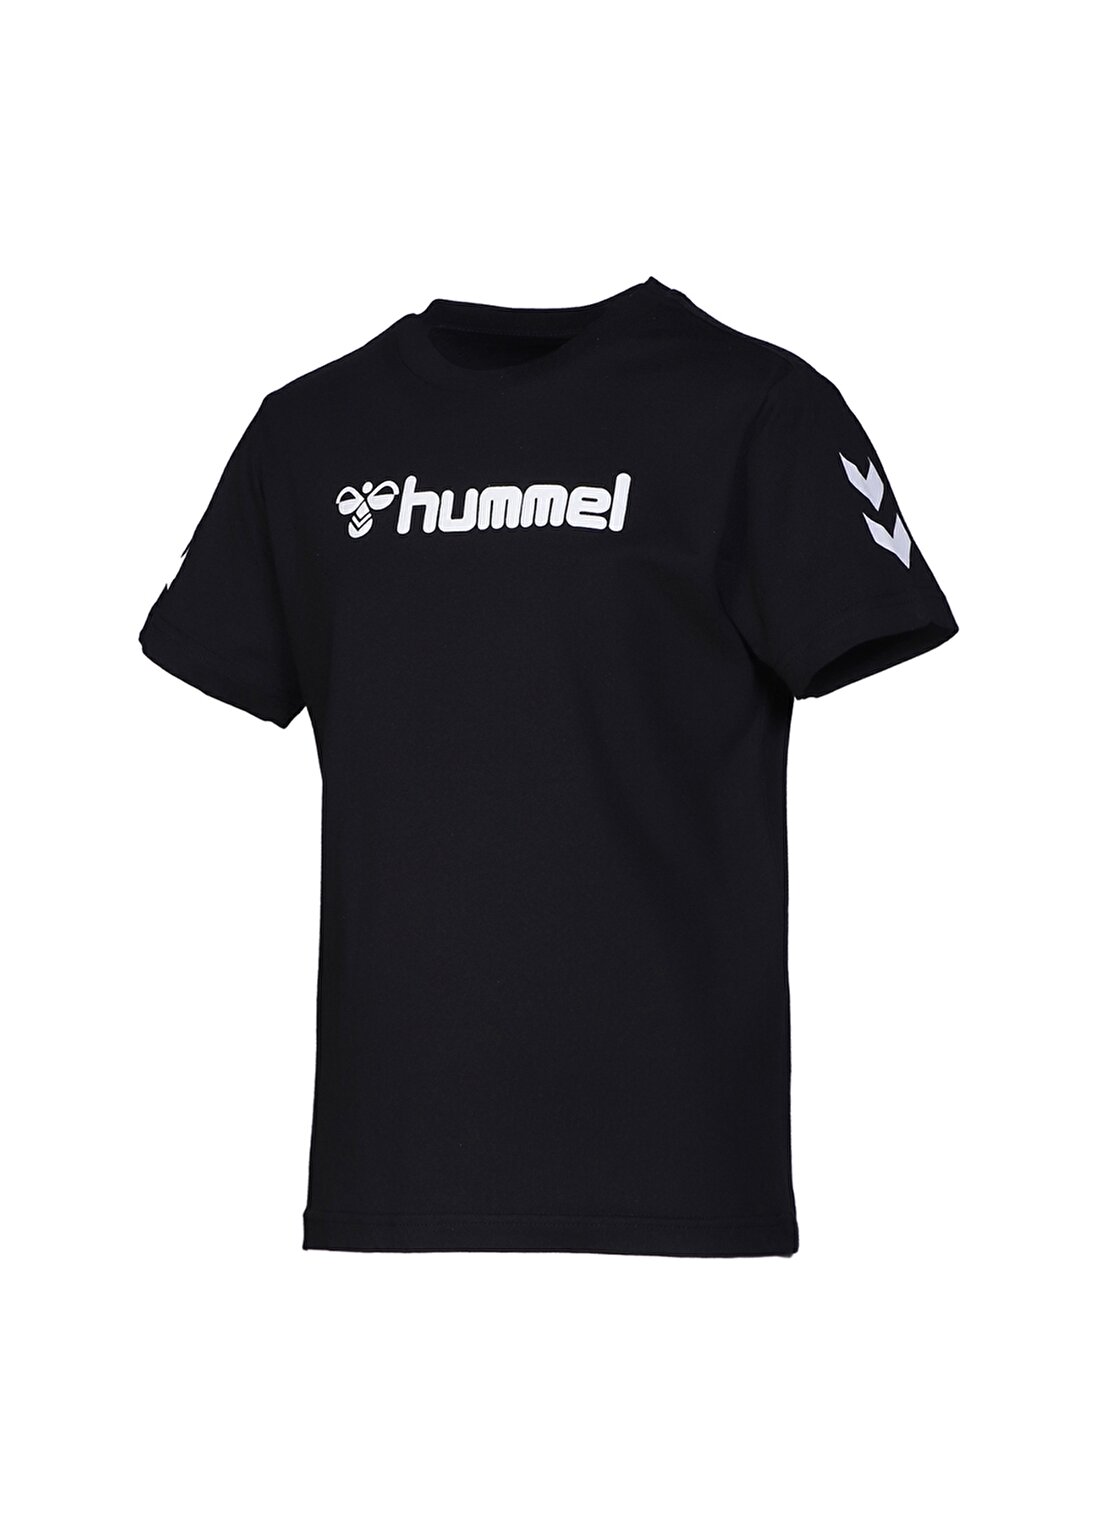 Hummel 911157-2001 Gredel Erkek Çocuk T-Shirt